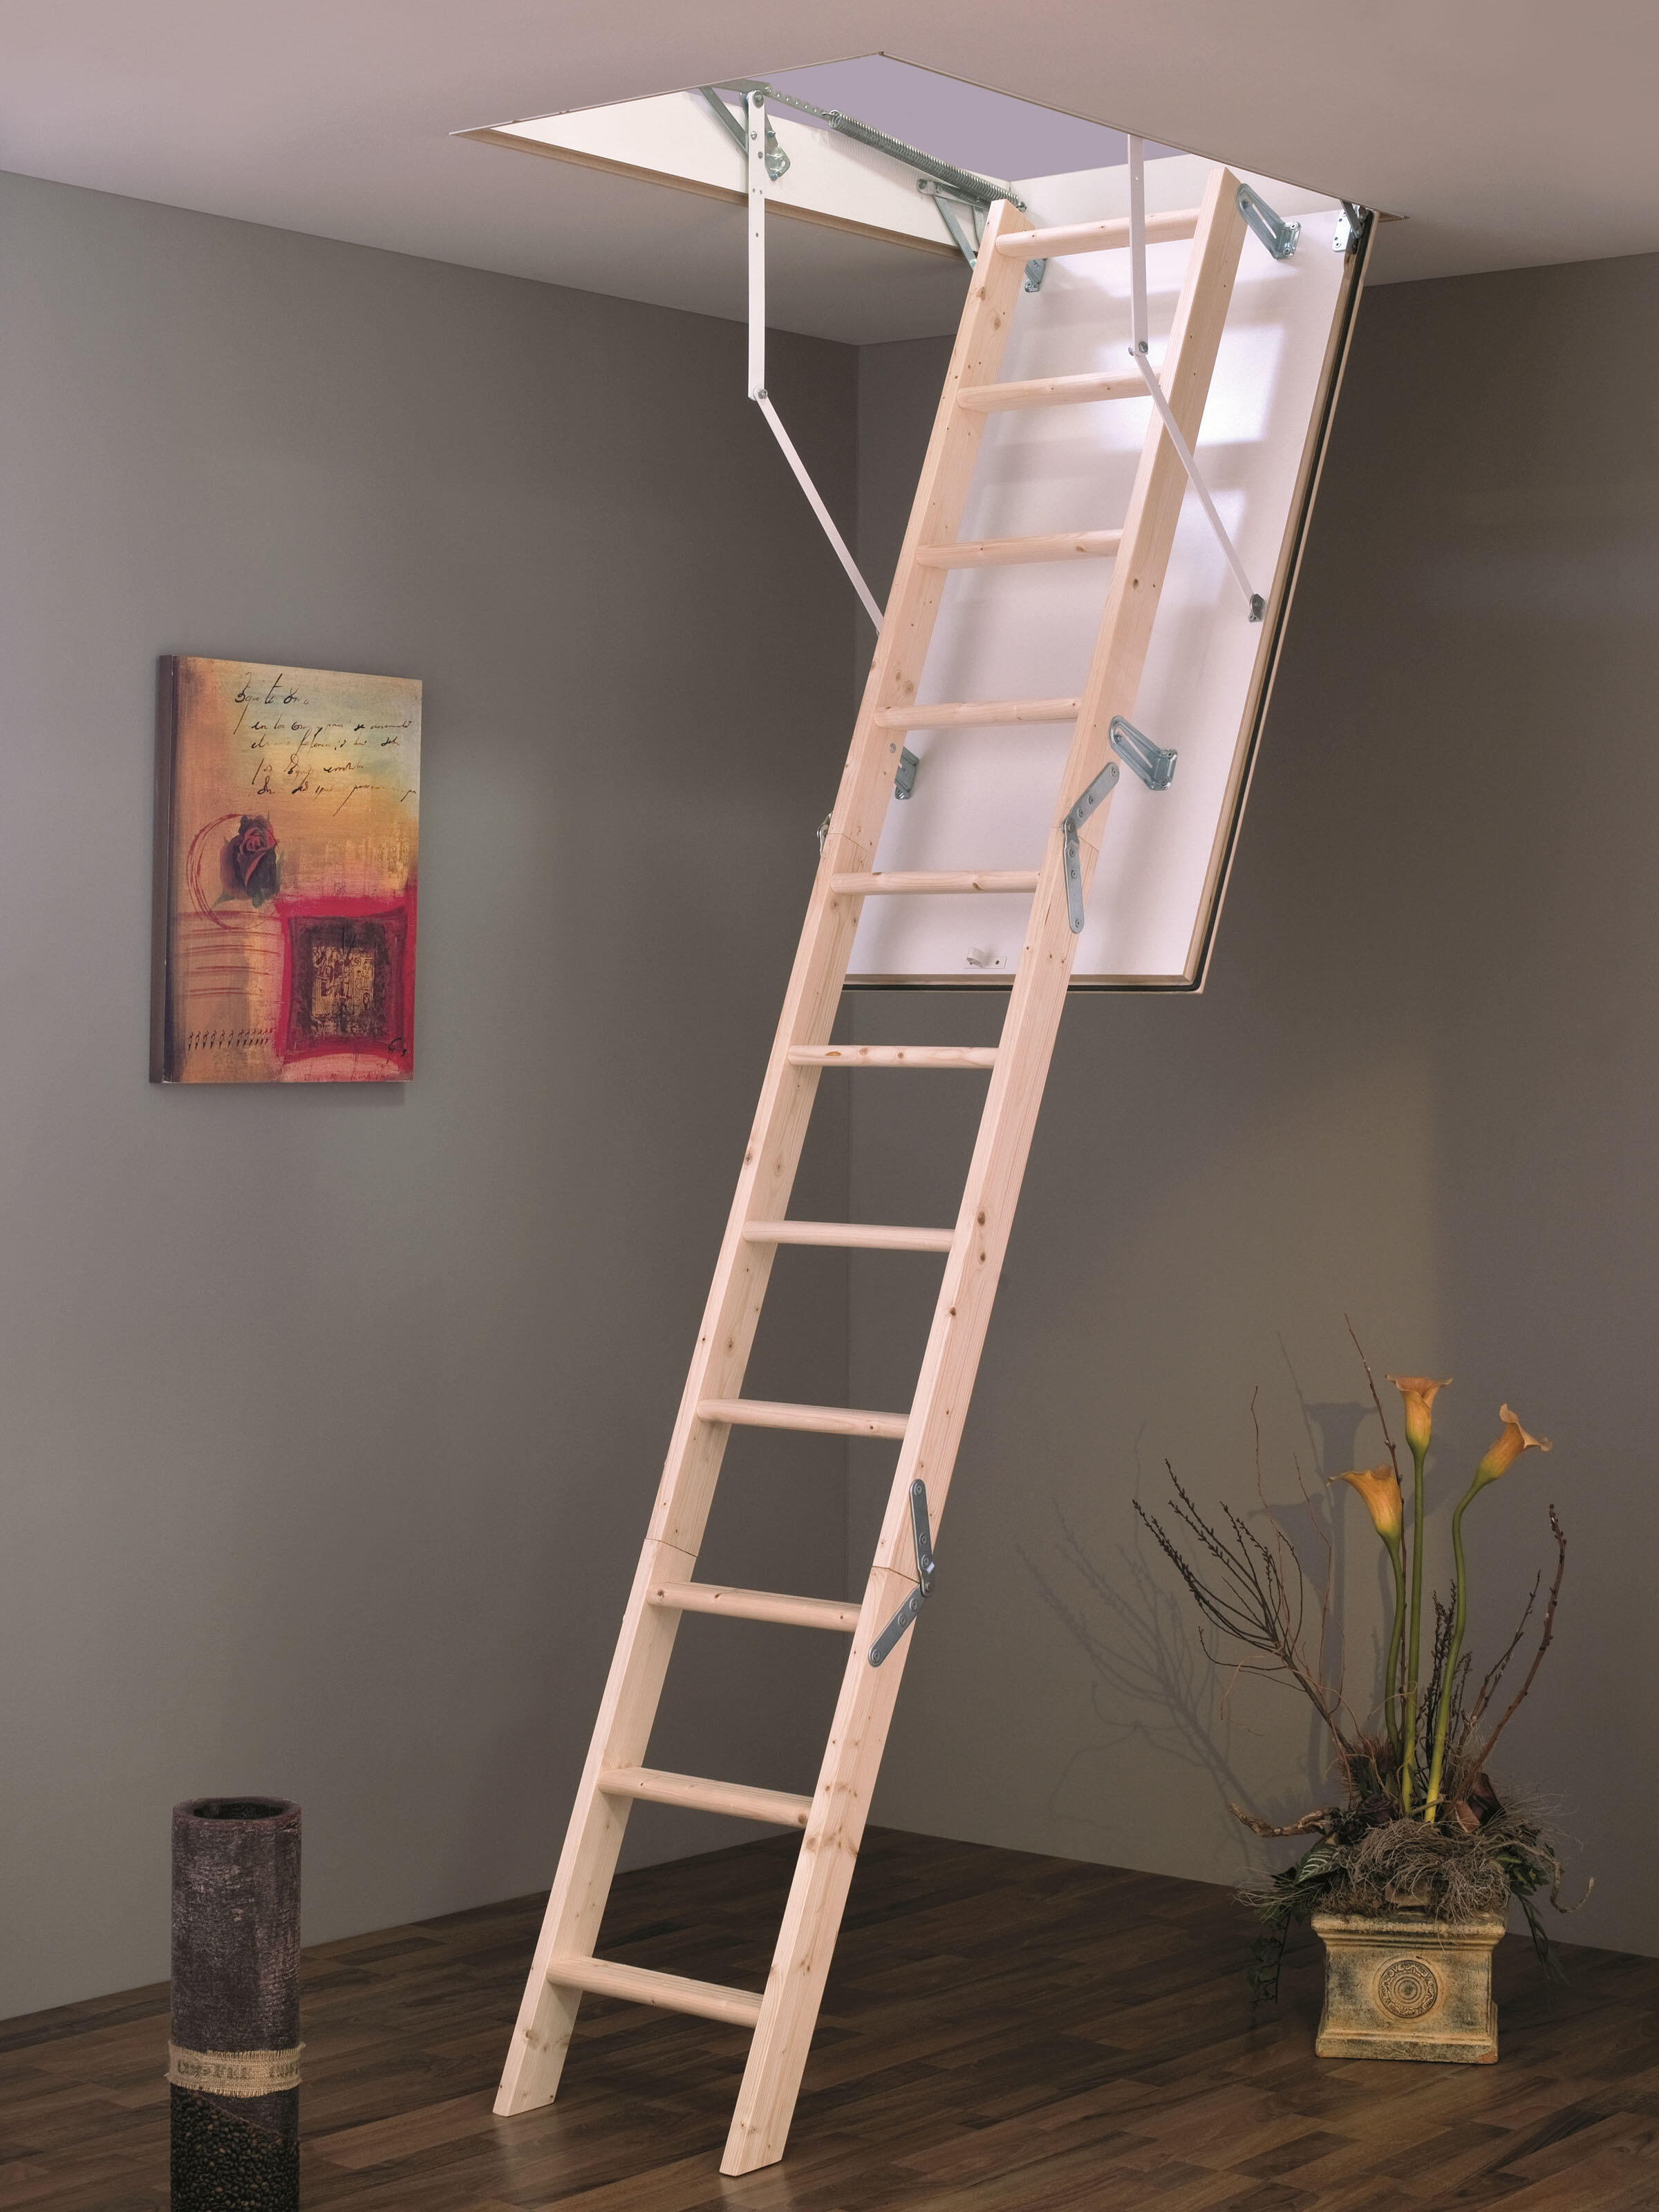 Escalera escamoteable isowood 120x60cm